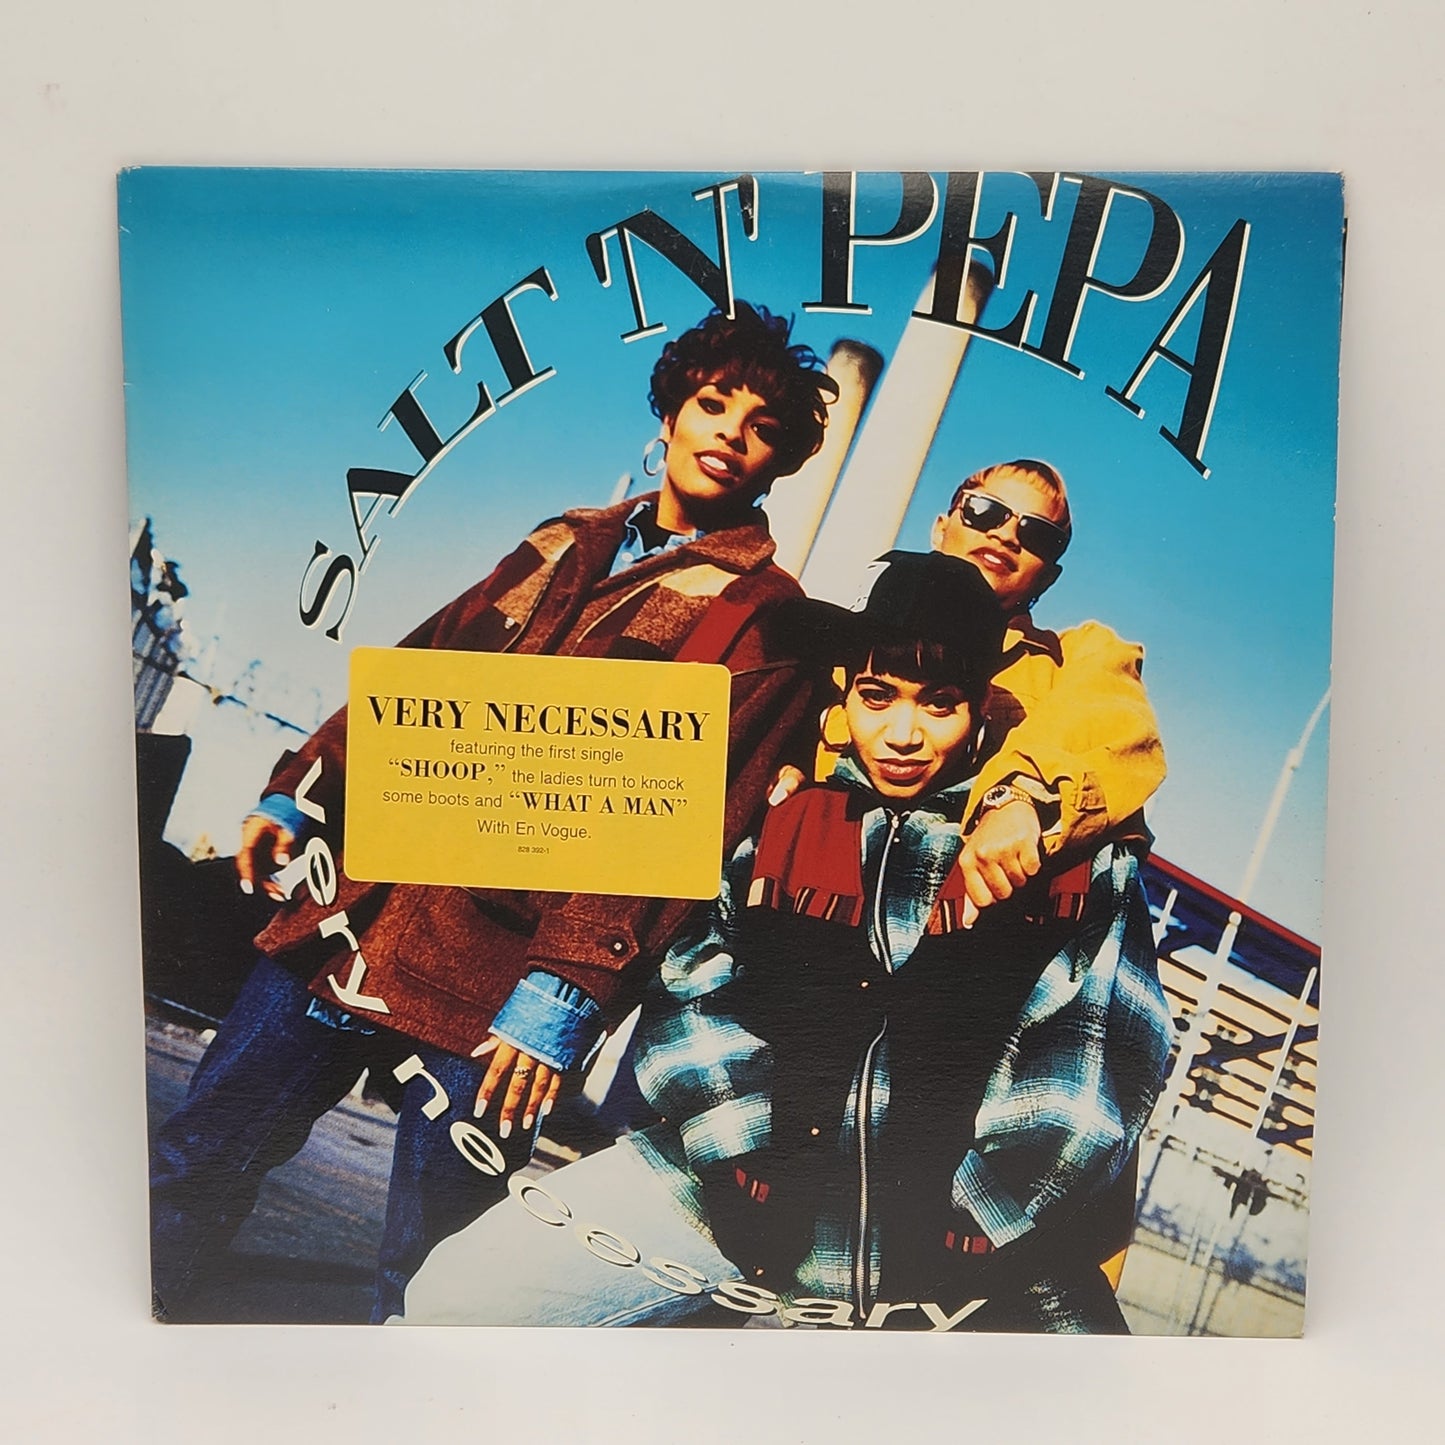 Salt 'N Pepa 1993 "Very Necessary" Hip Hop Promo Record Album